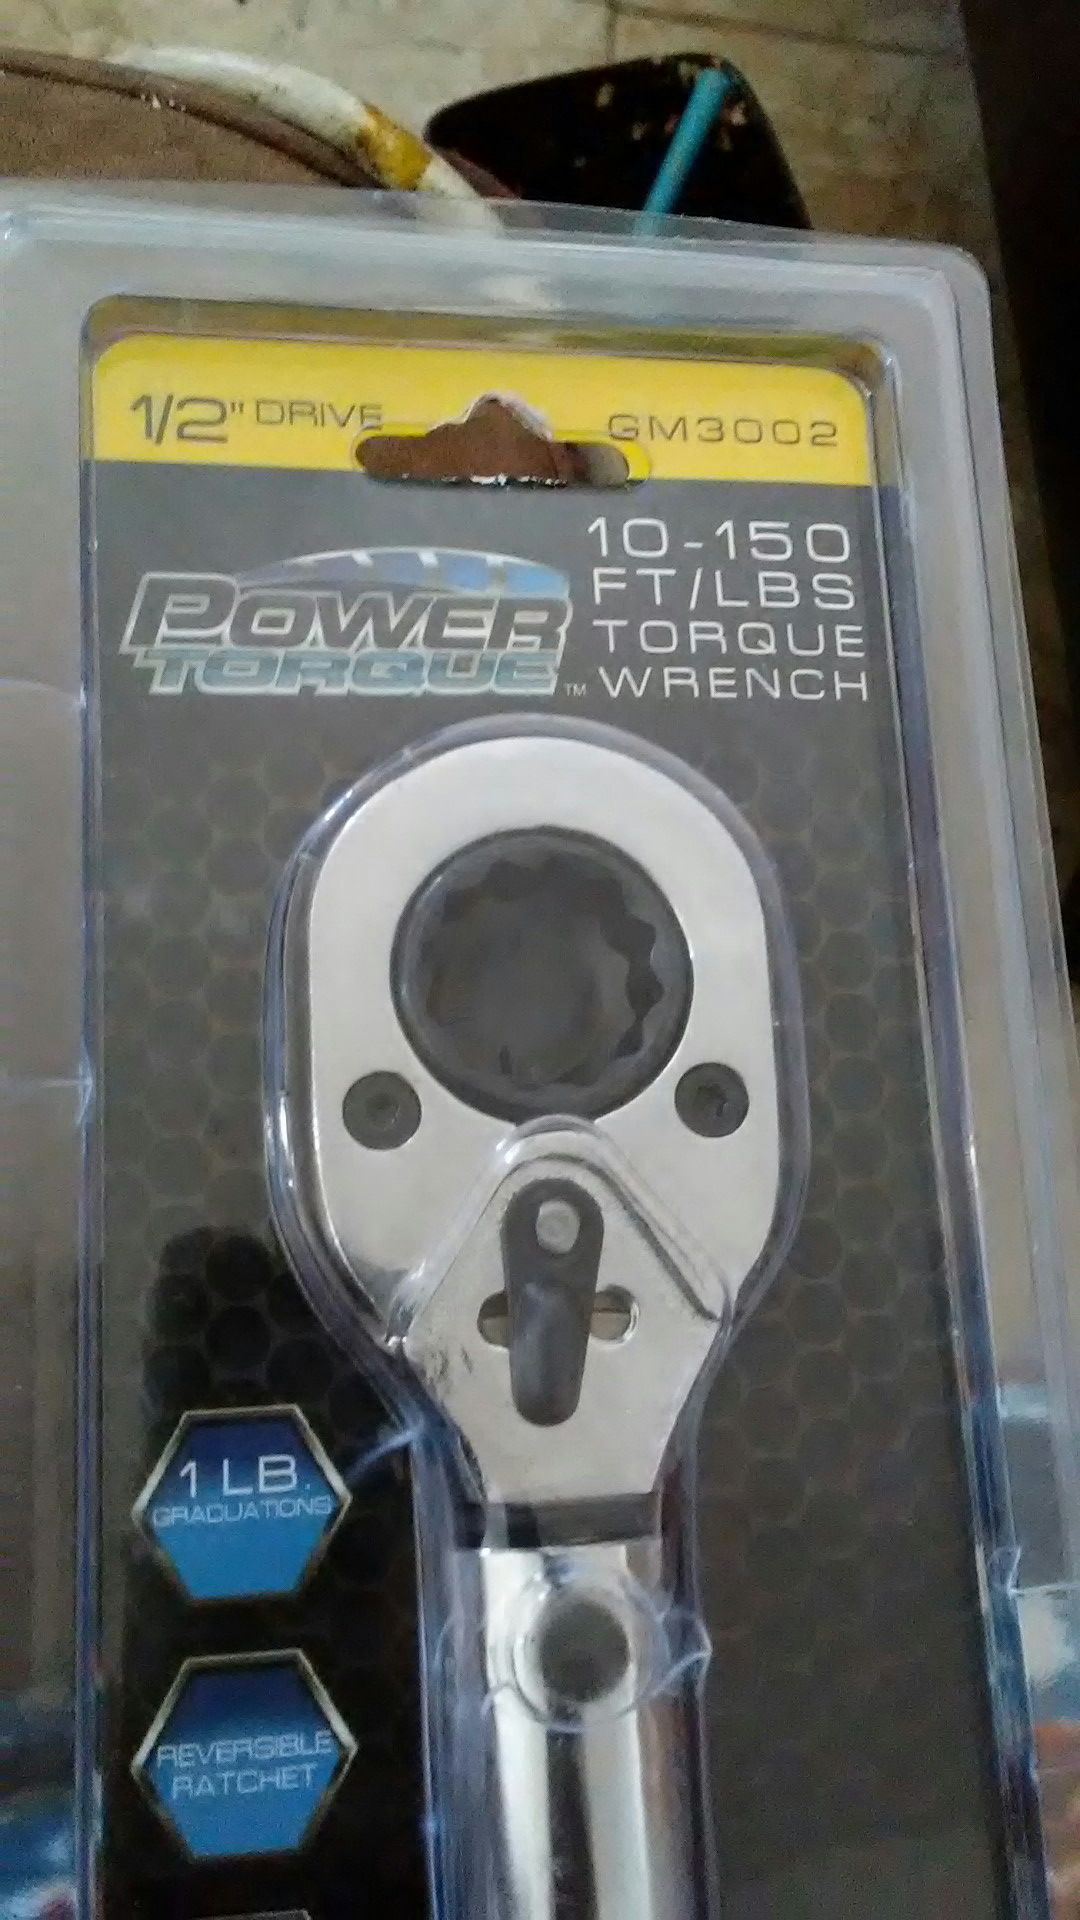 Power Torque 10-150 ft/lbs torque wrench